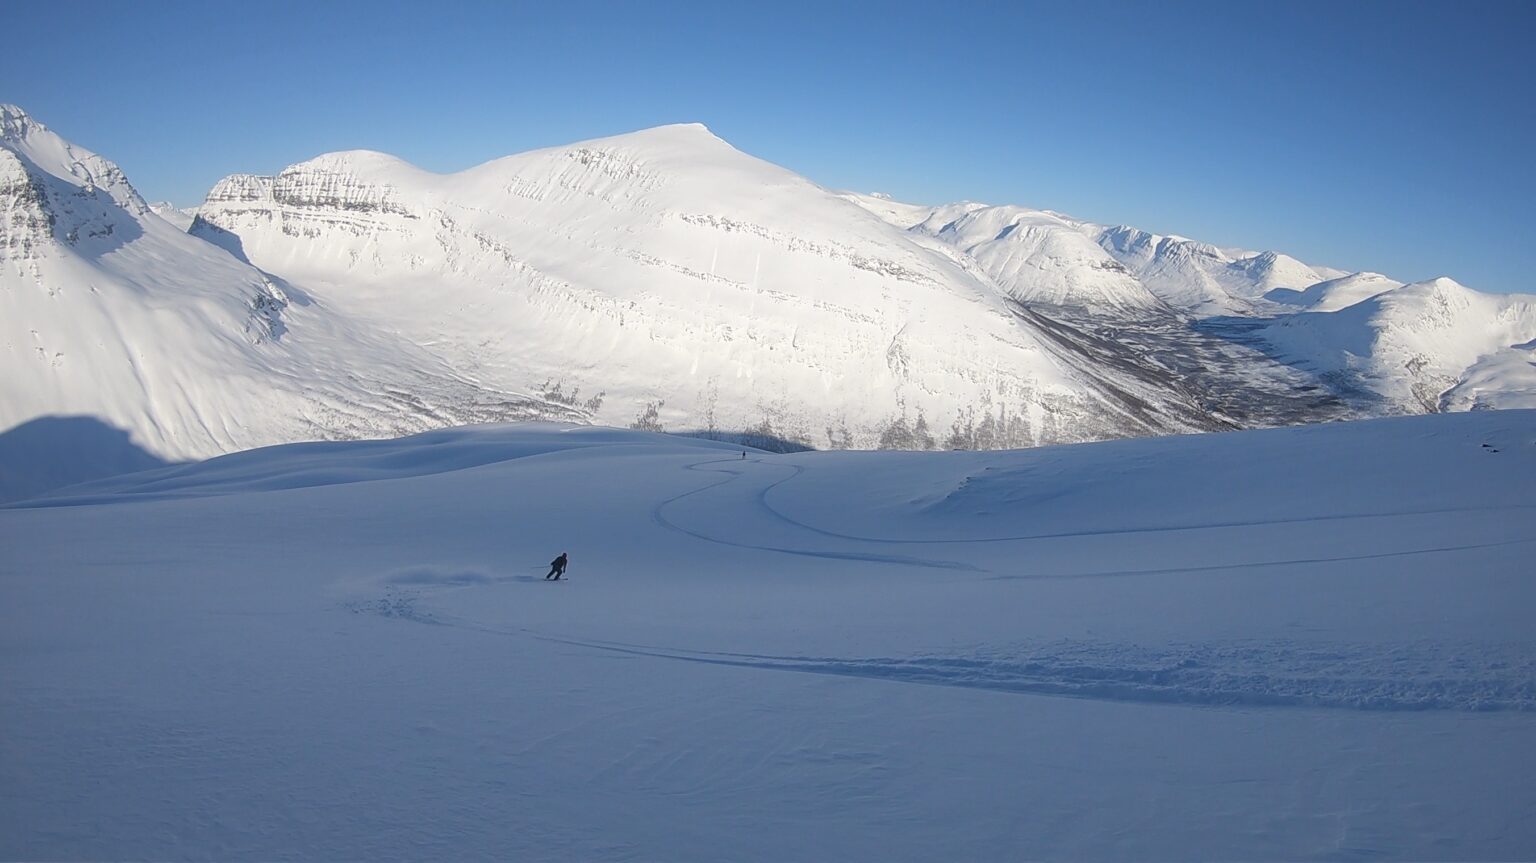 Skiing into the Northeast bowl of Sjufjellet